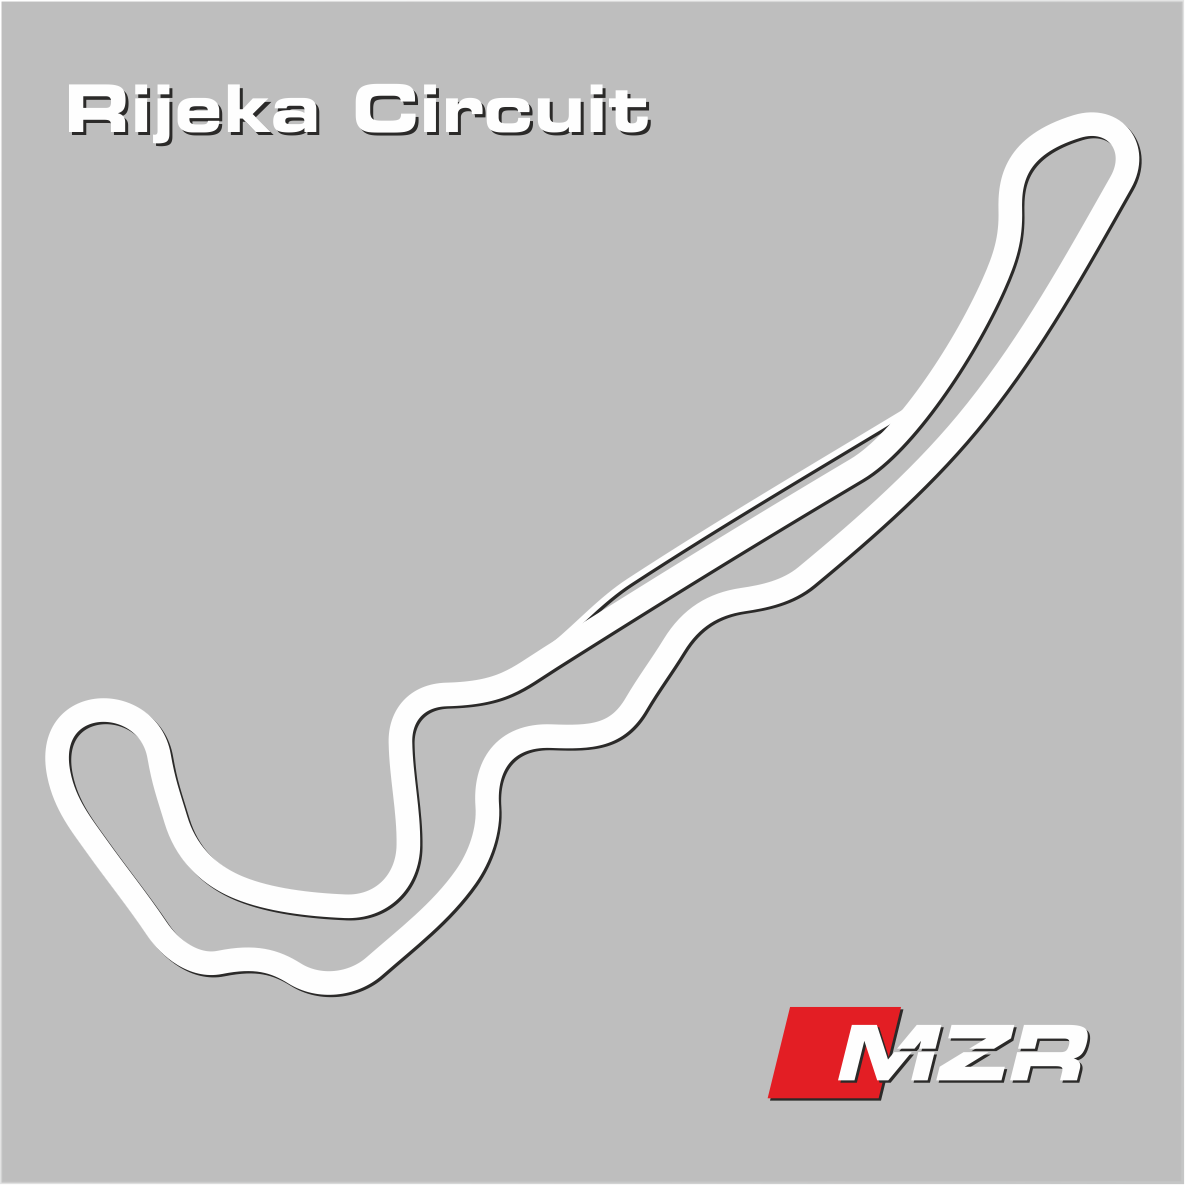 Rijeka Circuit